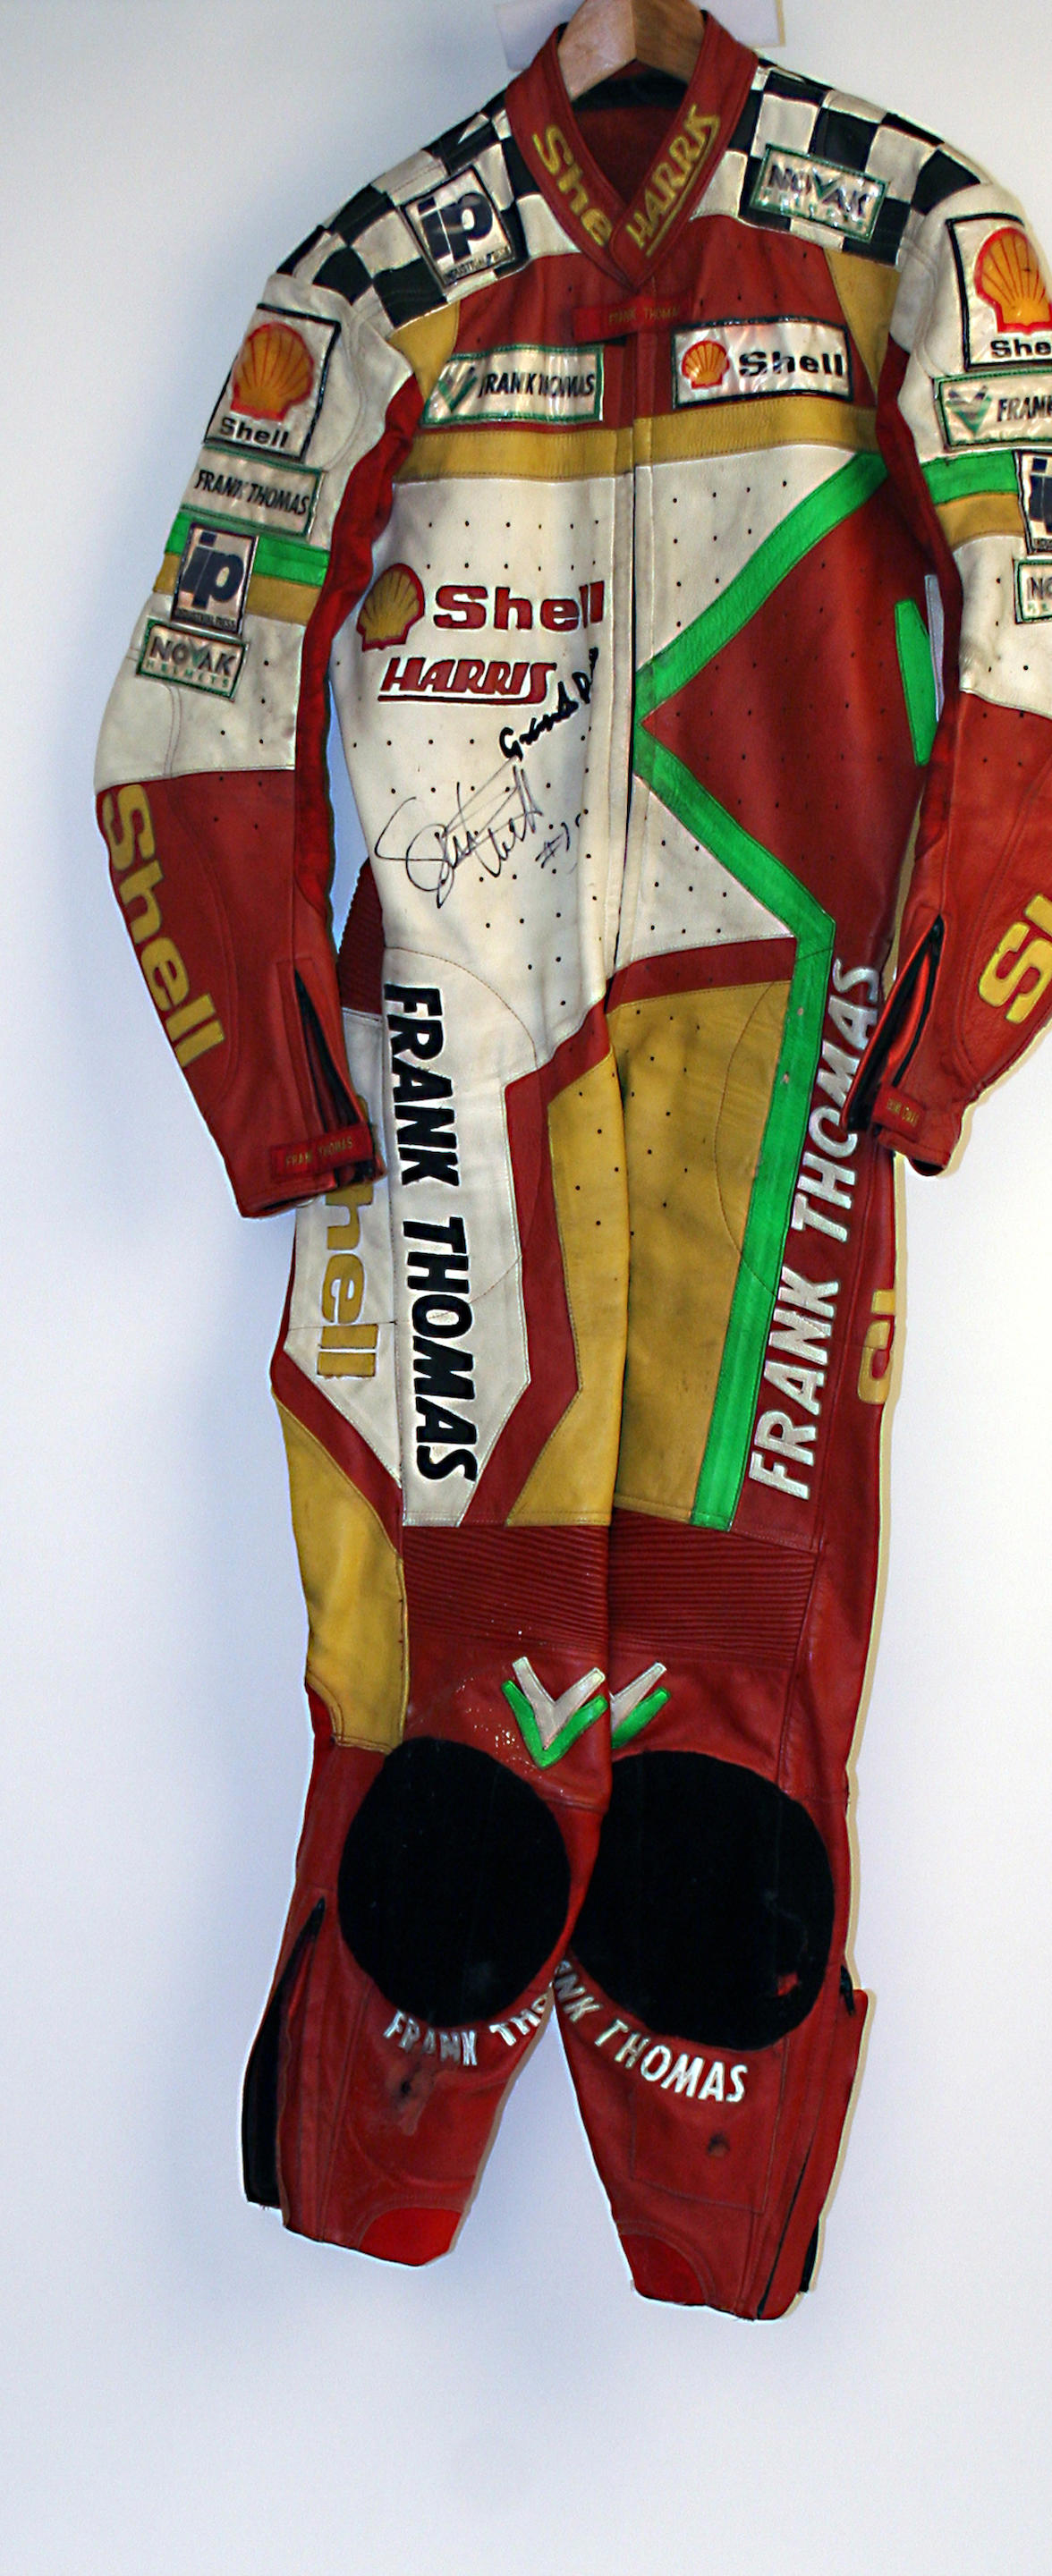 Bonhams Cars : Sean Emmett A signed set of racing leathers by Frank Thomas